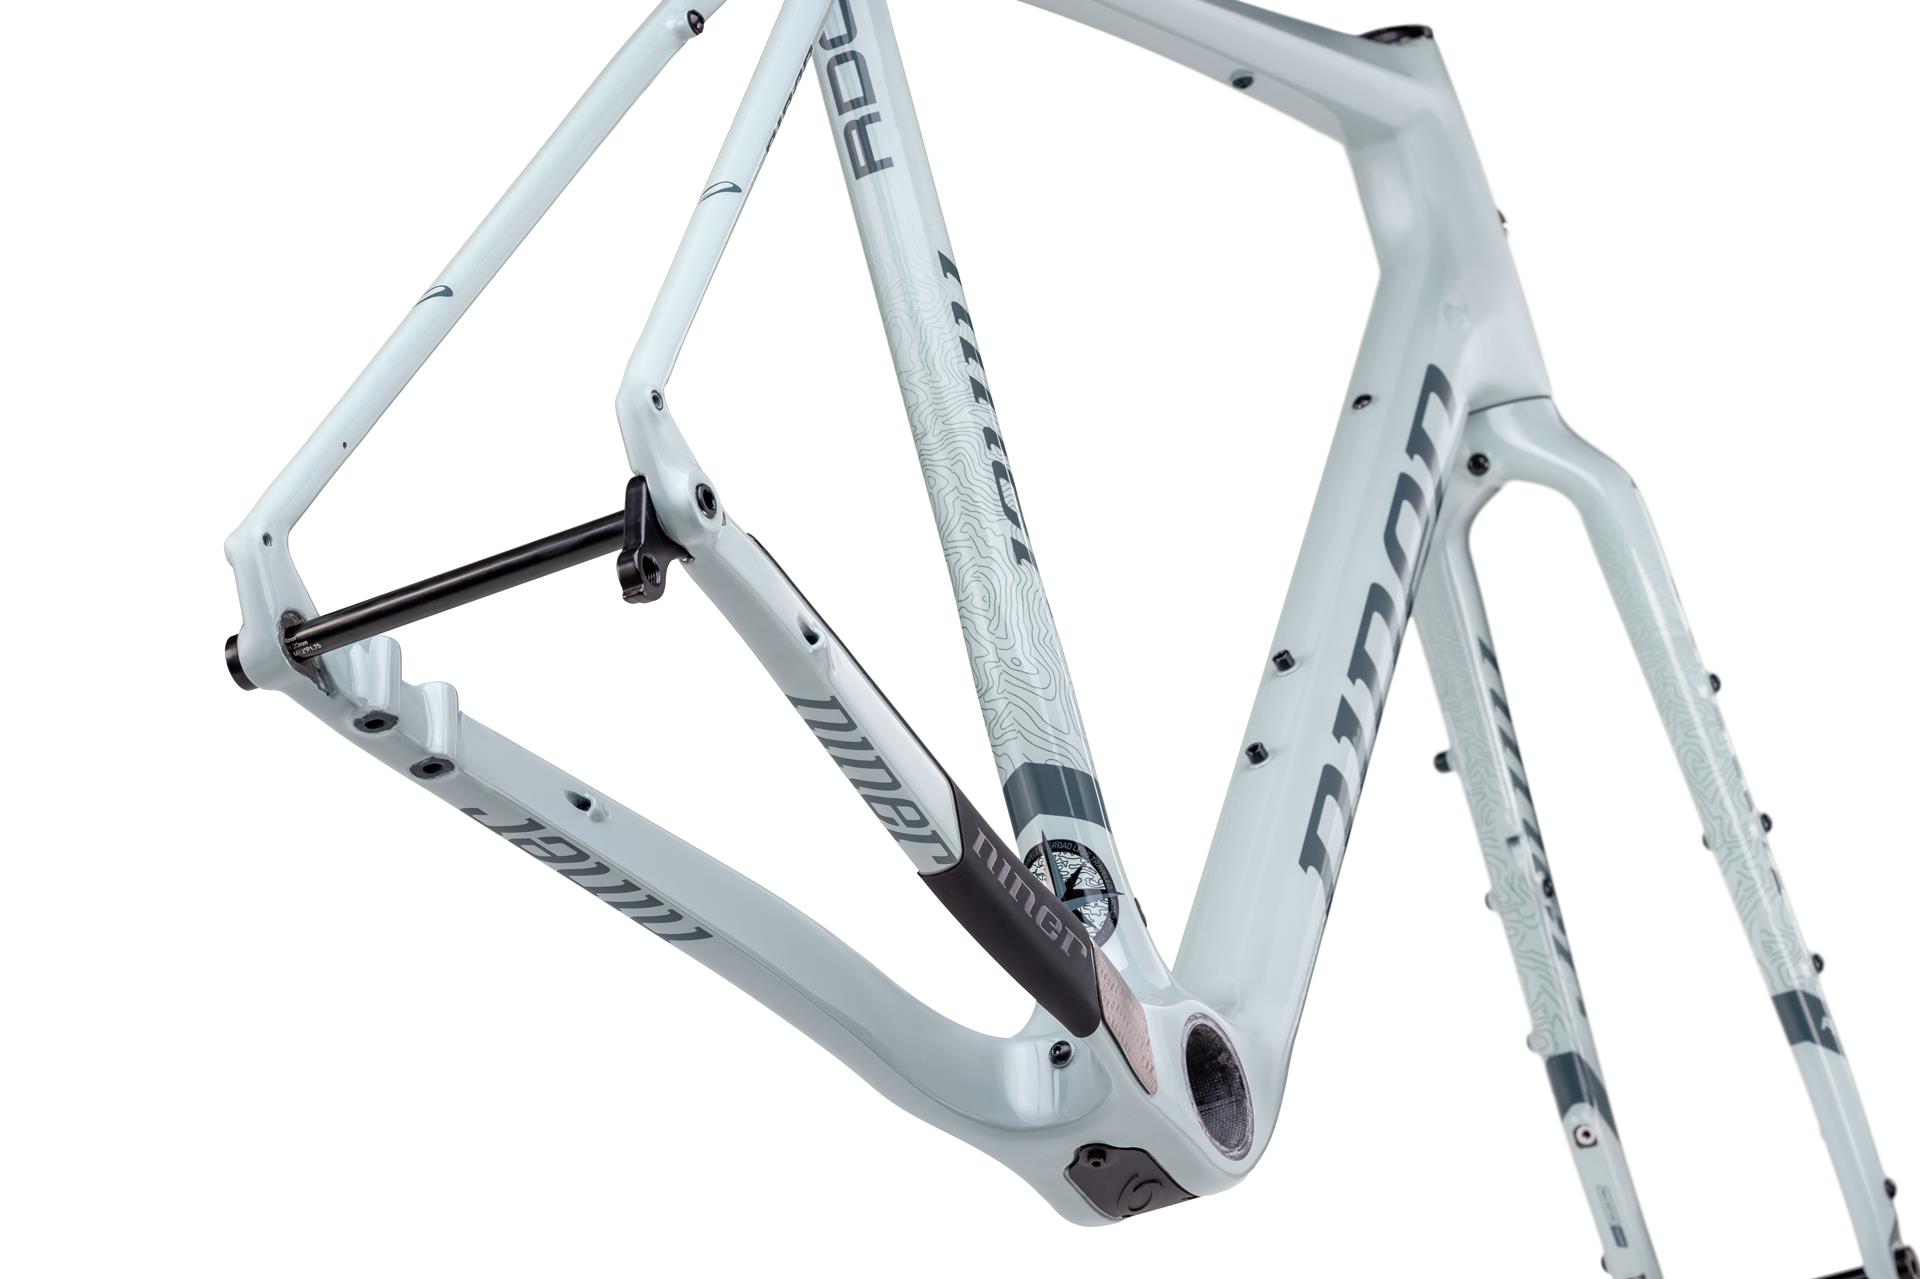 Niner RLT RDO 2-star велосипед, серый шифер, 59